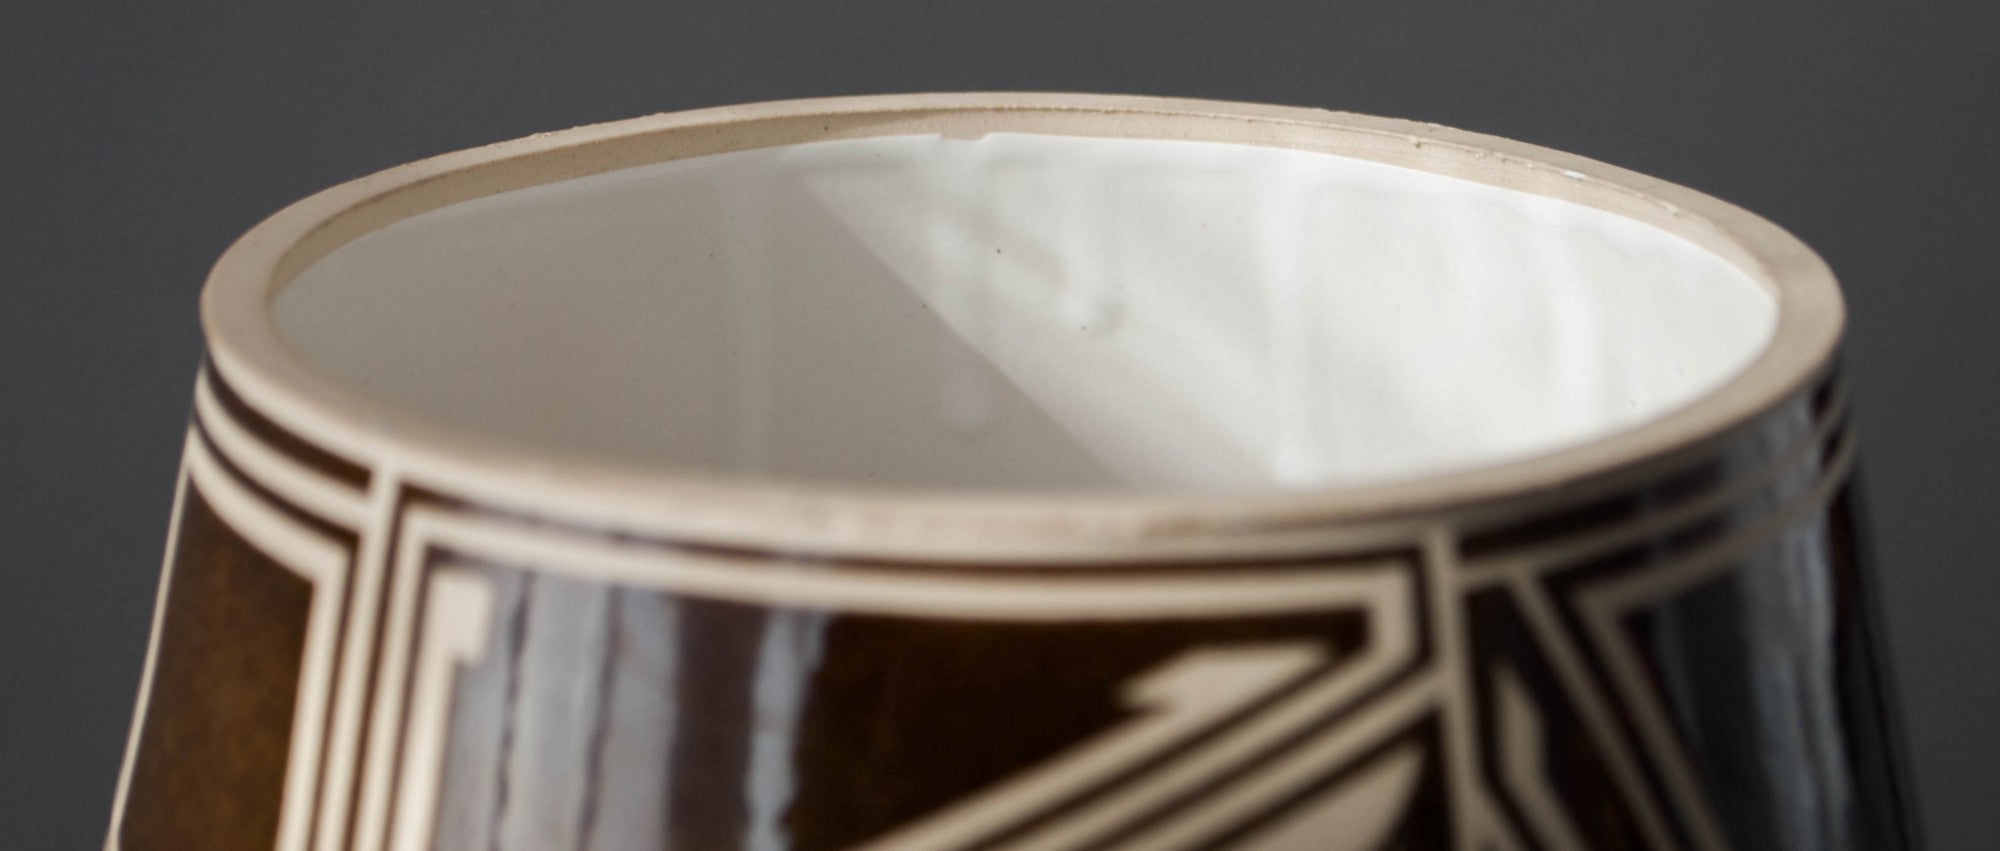 Ceramic Vessel by Jonathan Van Patten